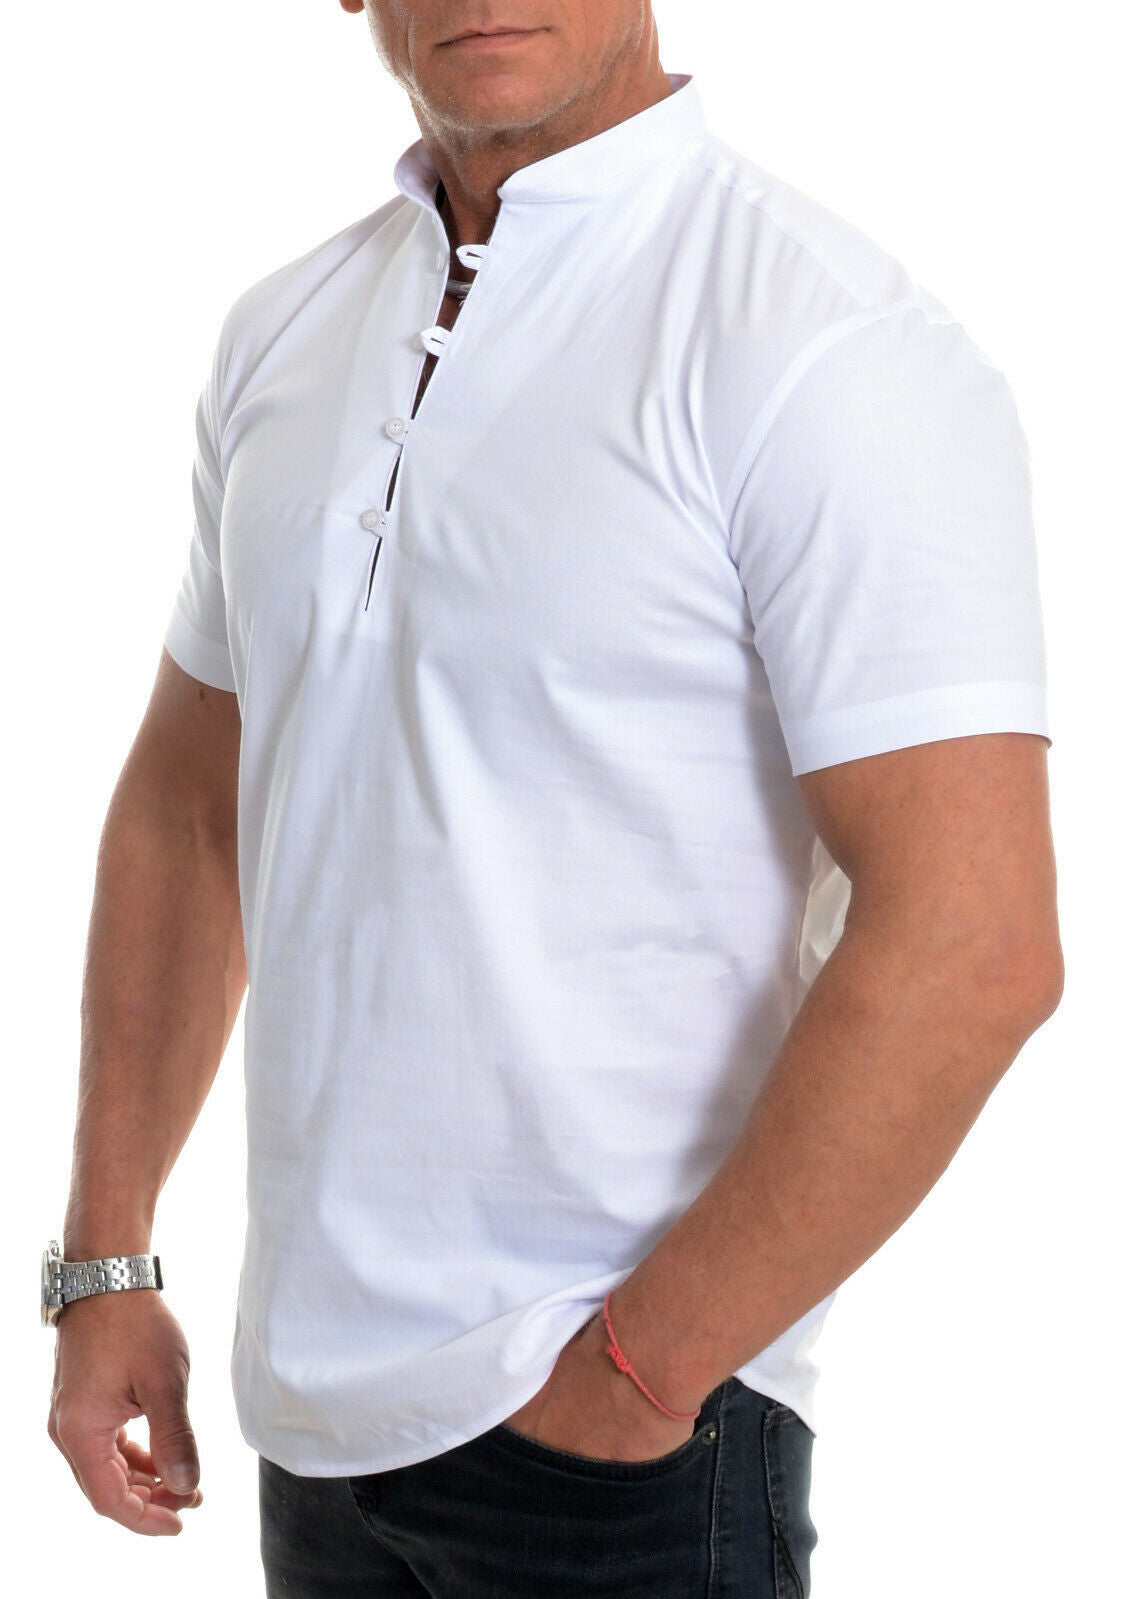 2020 Charm Men's Shirt Ultra Light Short-sleeved Casual